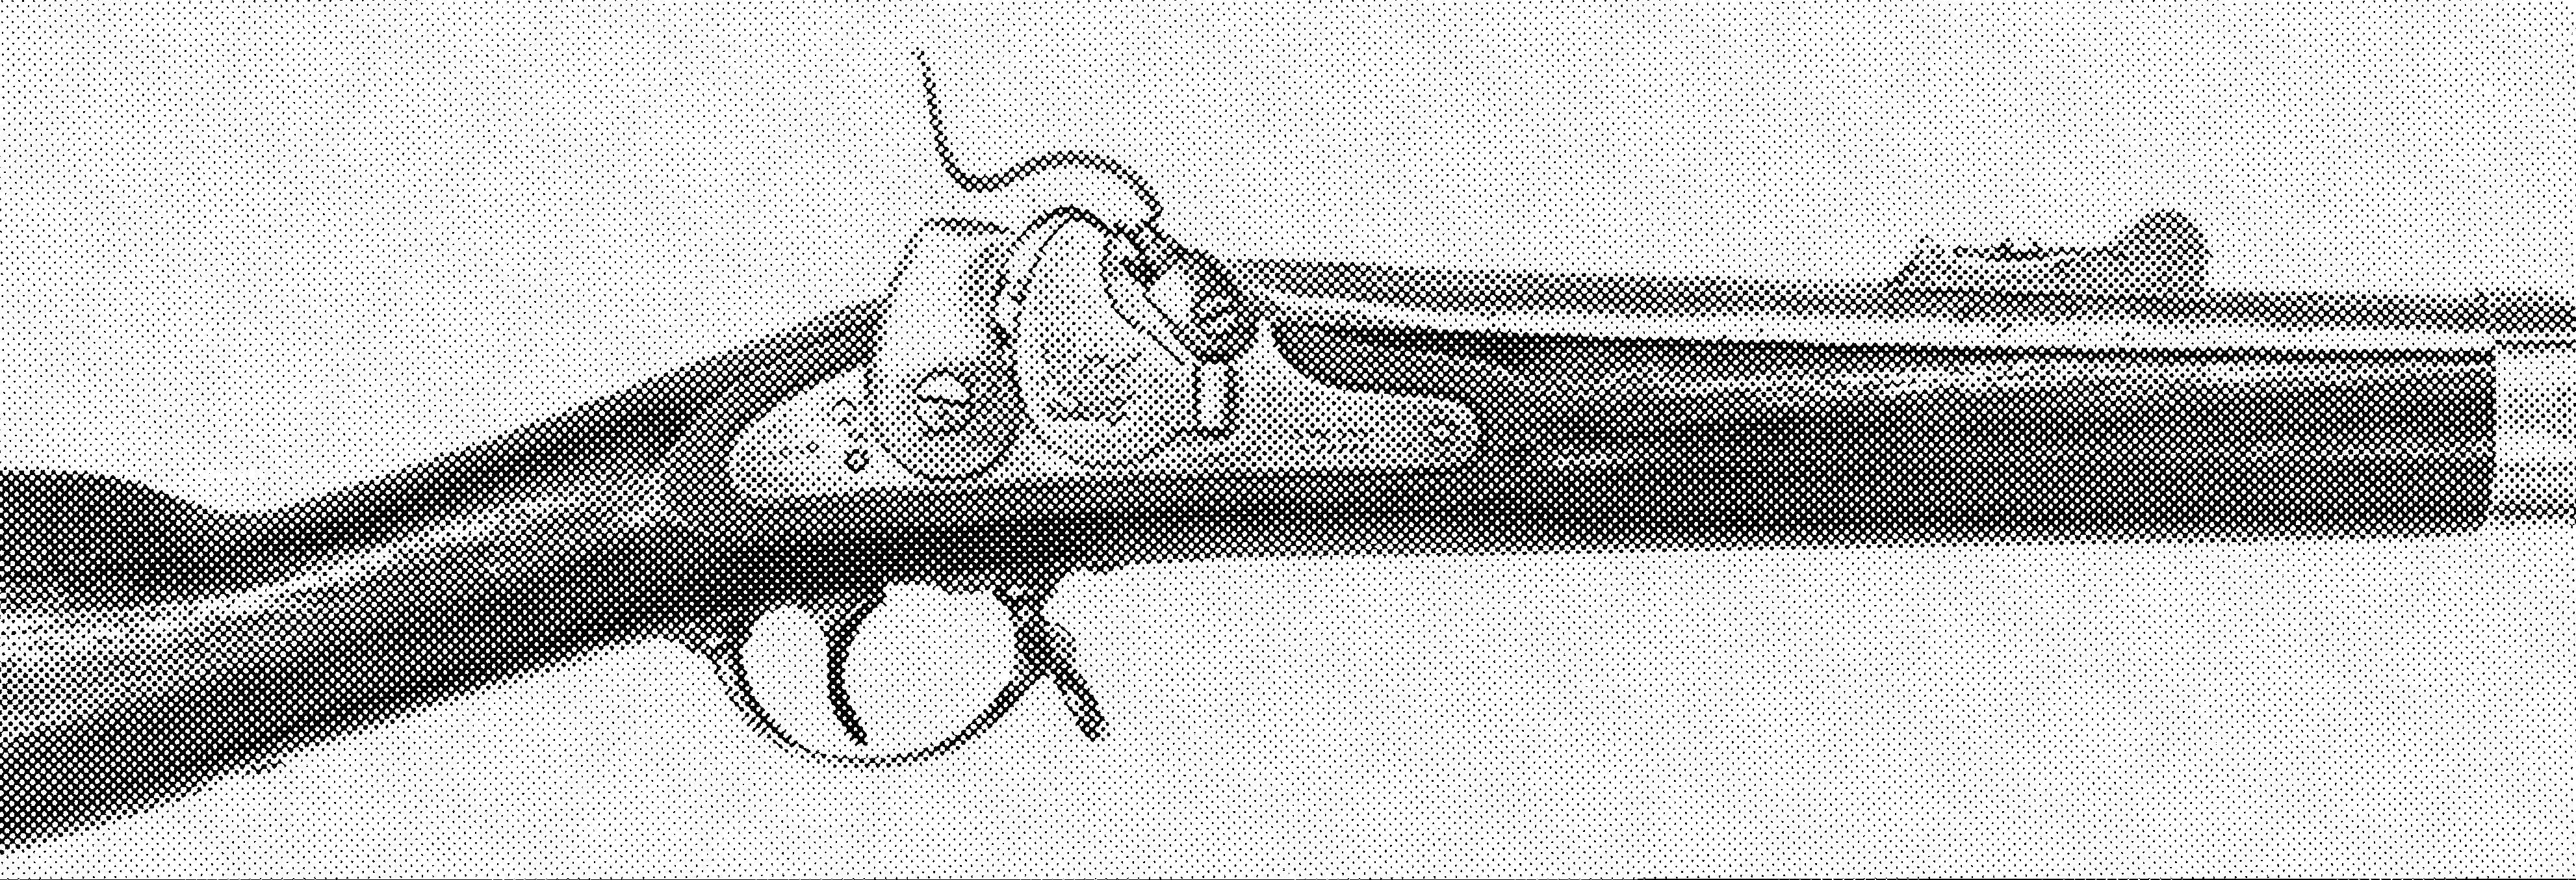 Whitney M1855 Rifle Derivative